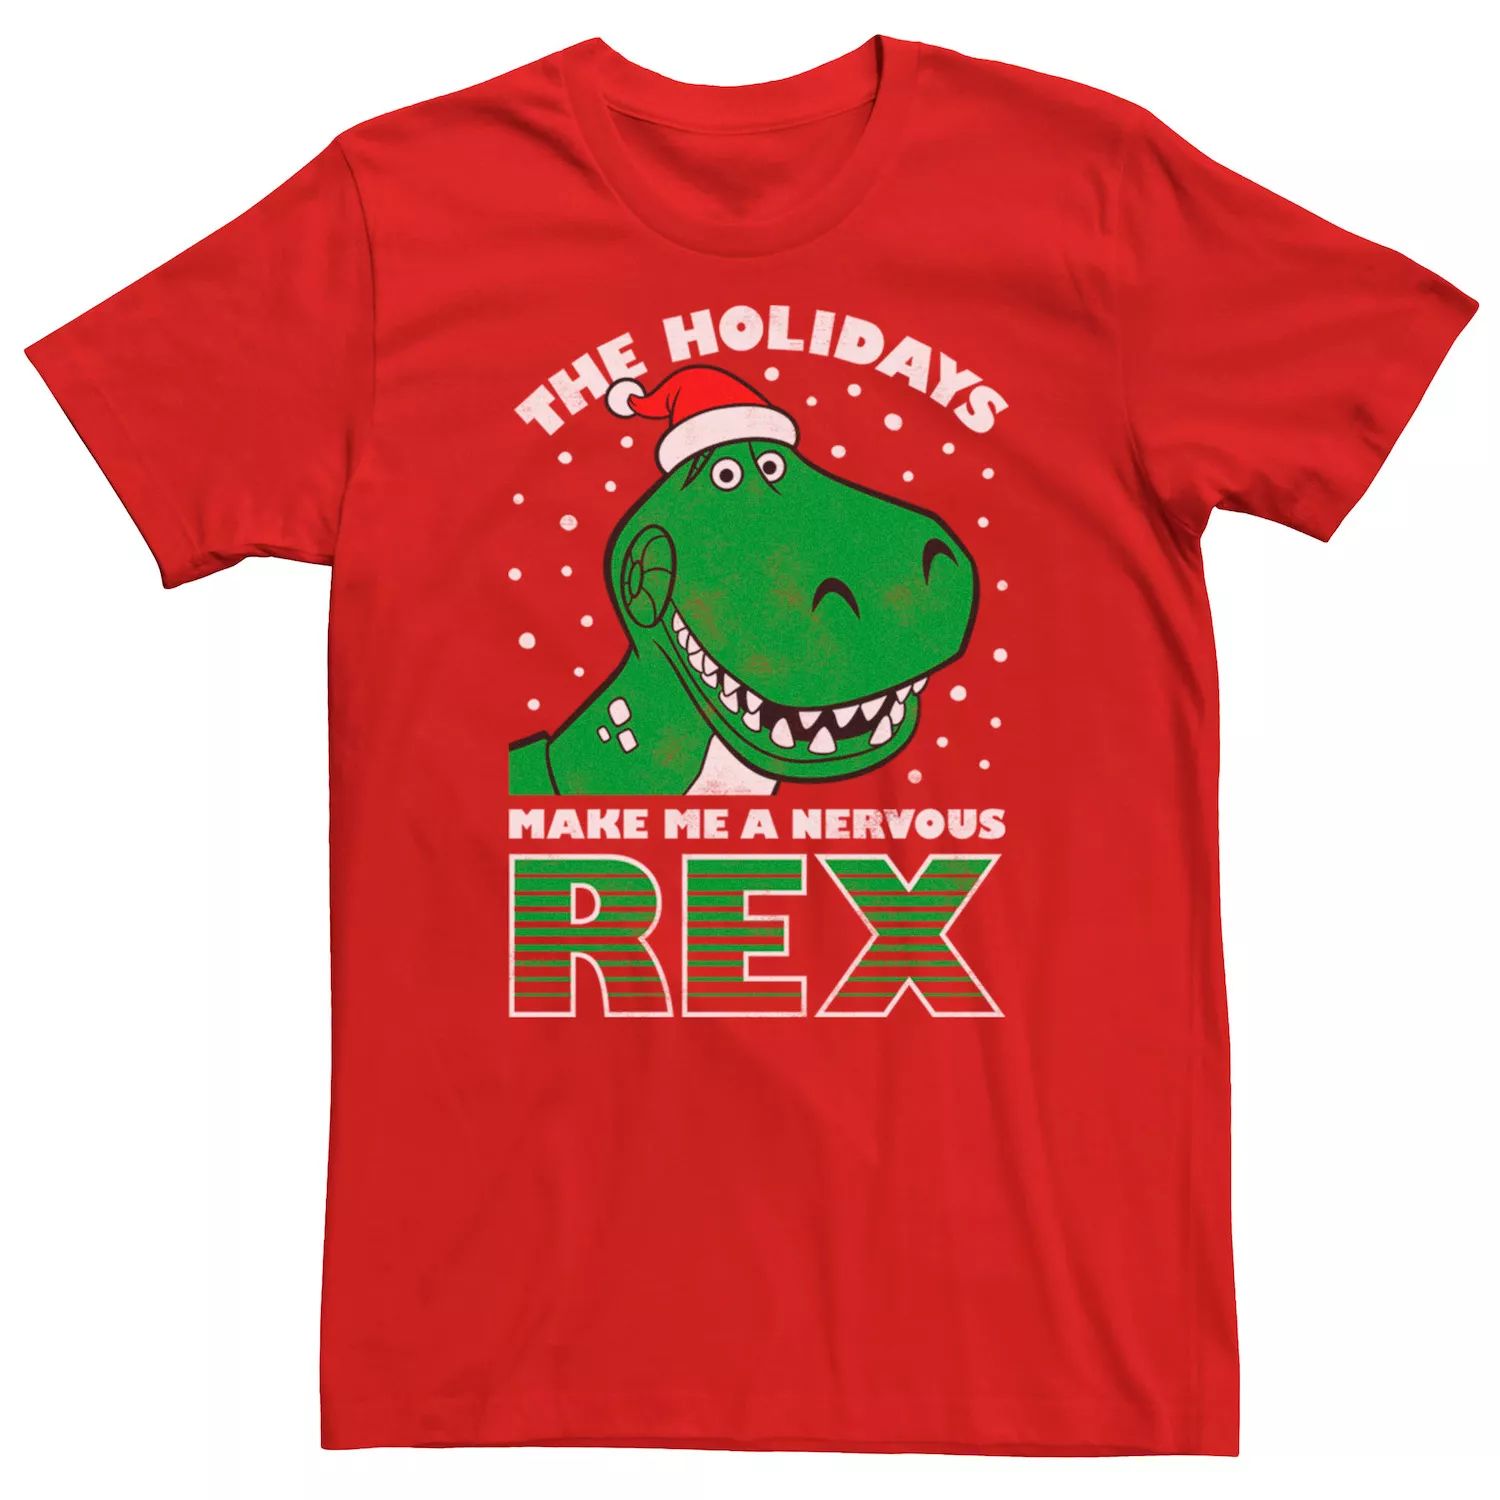 мужская футболка disney pixar toy story rex face licensed character Мужская футболка Disney/Pixar Toy Story Holidays Make Me A Nervous Rex Licensed Character